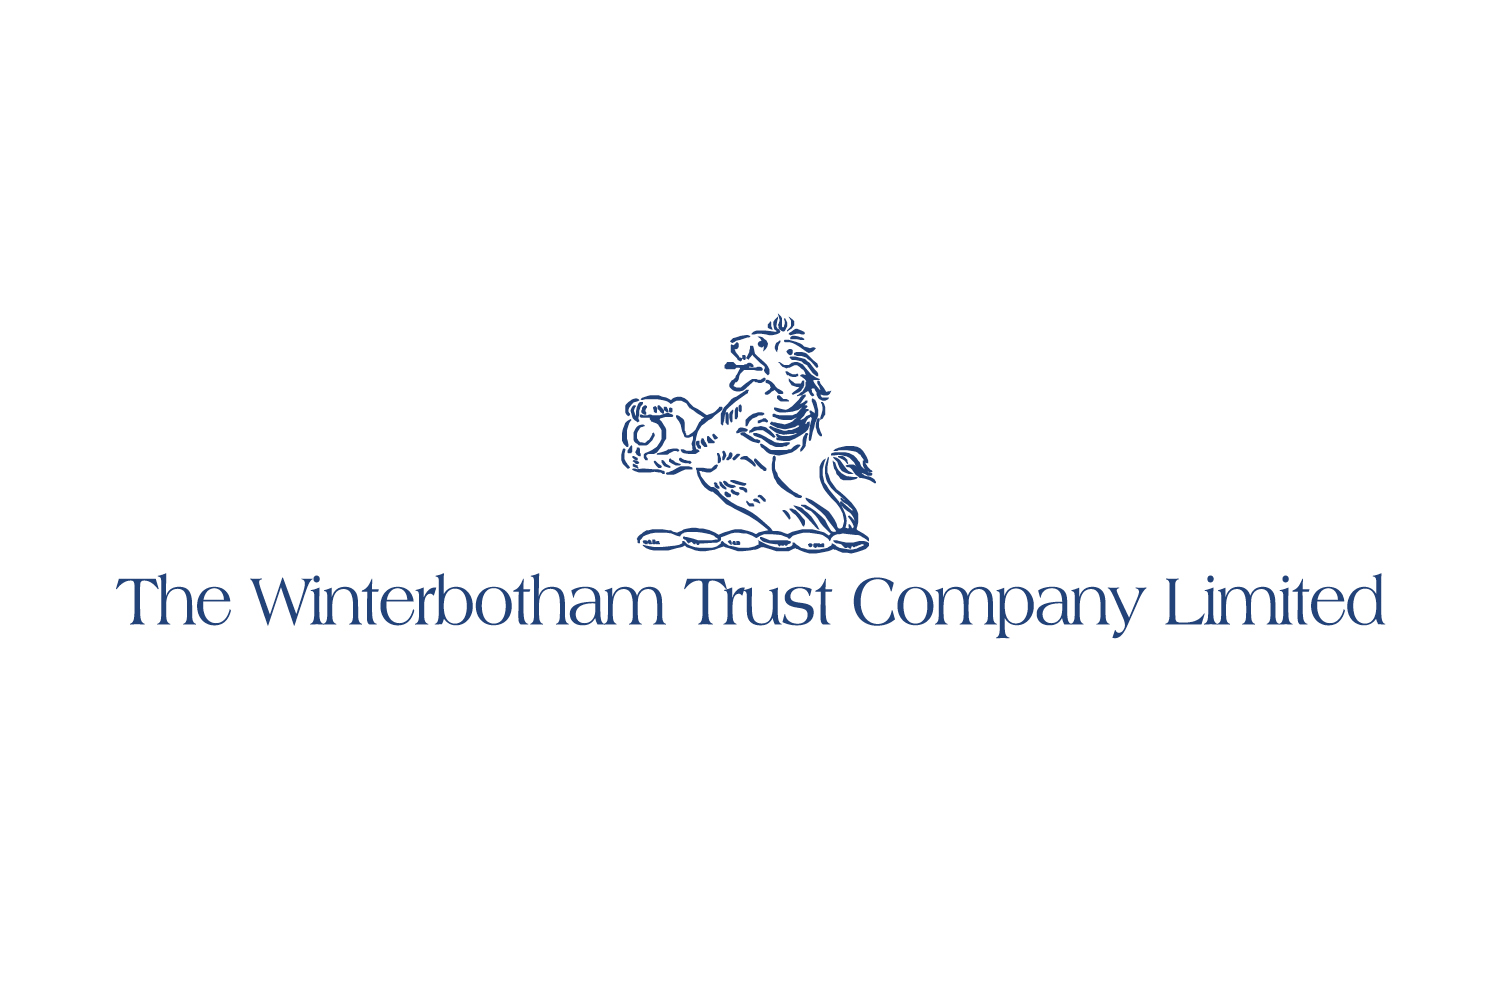 The Winterbotham Trust Company